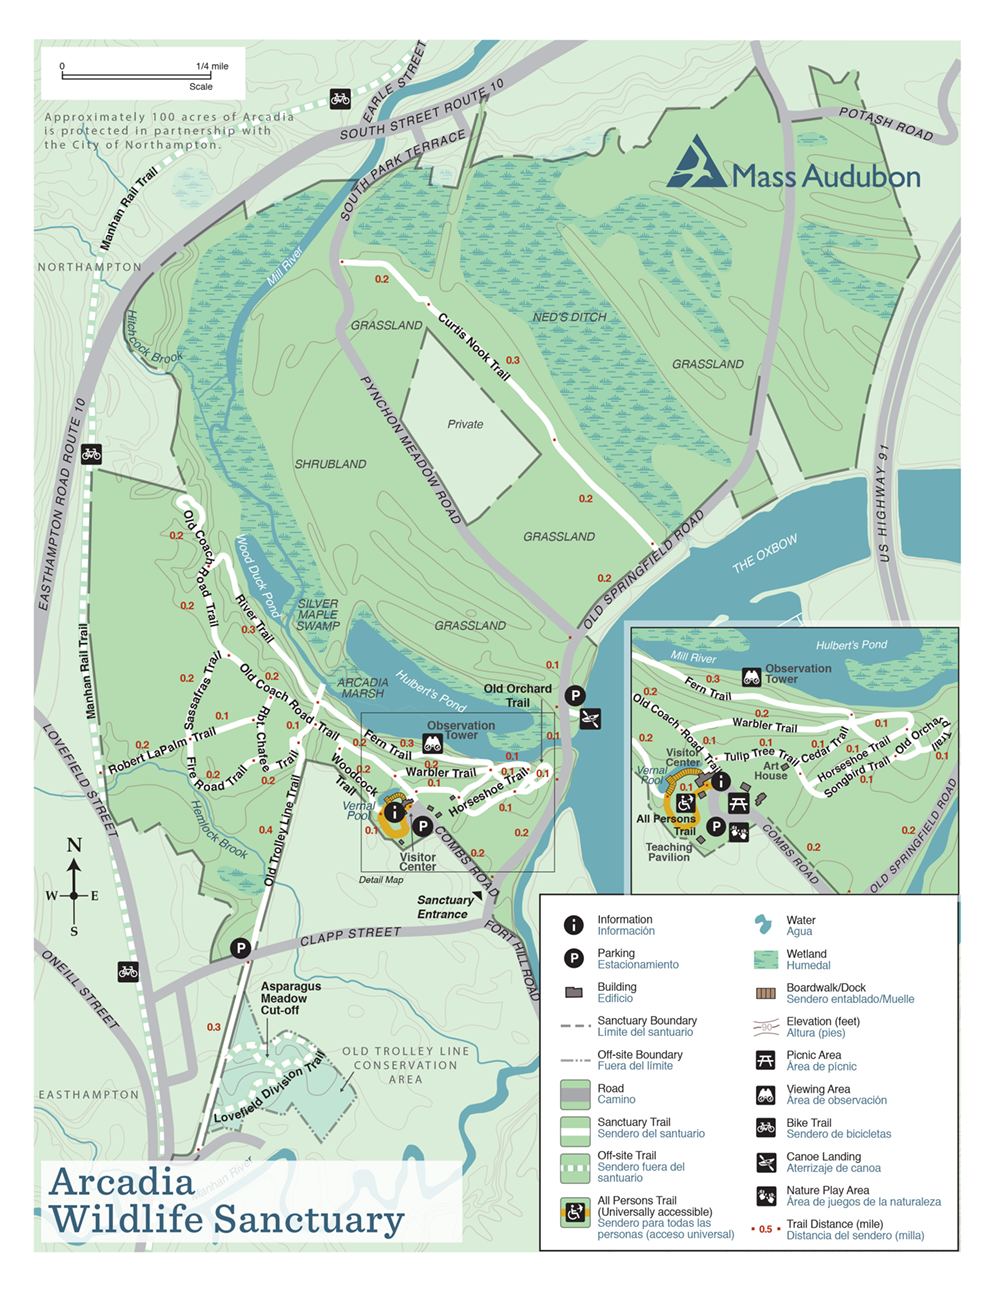 Arcadia Wildlife Sanctuary trail map in full color